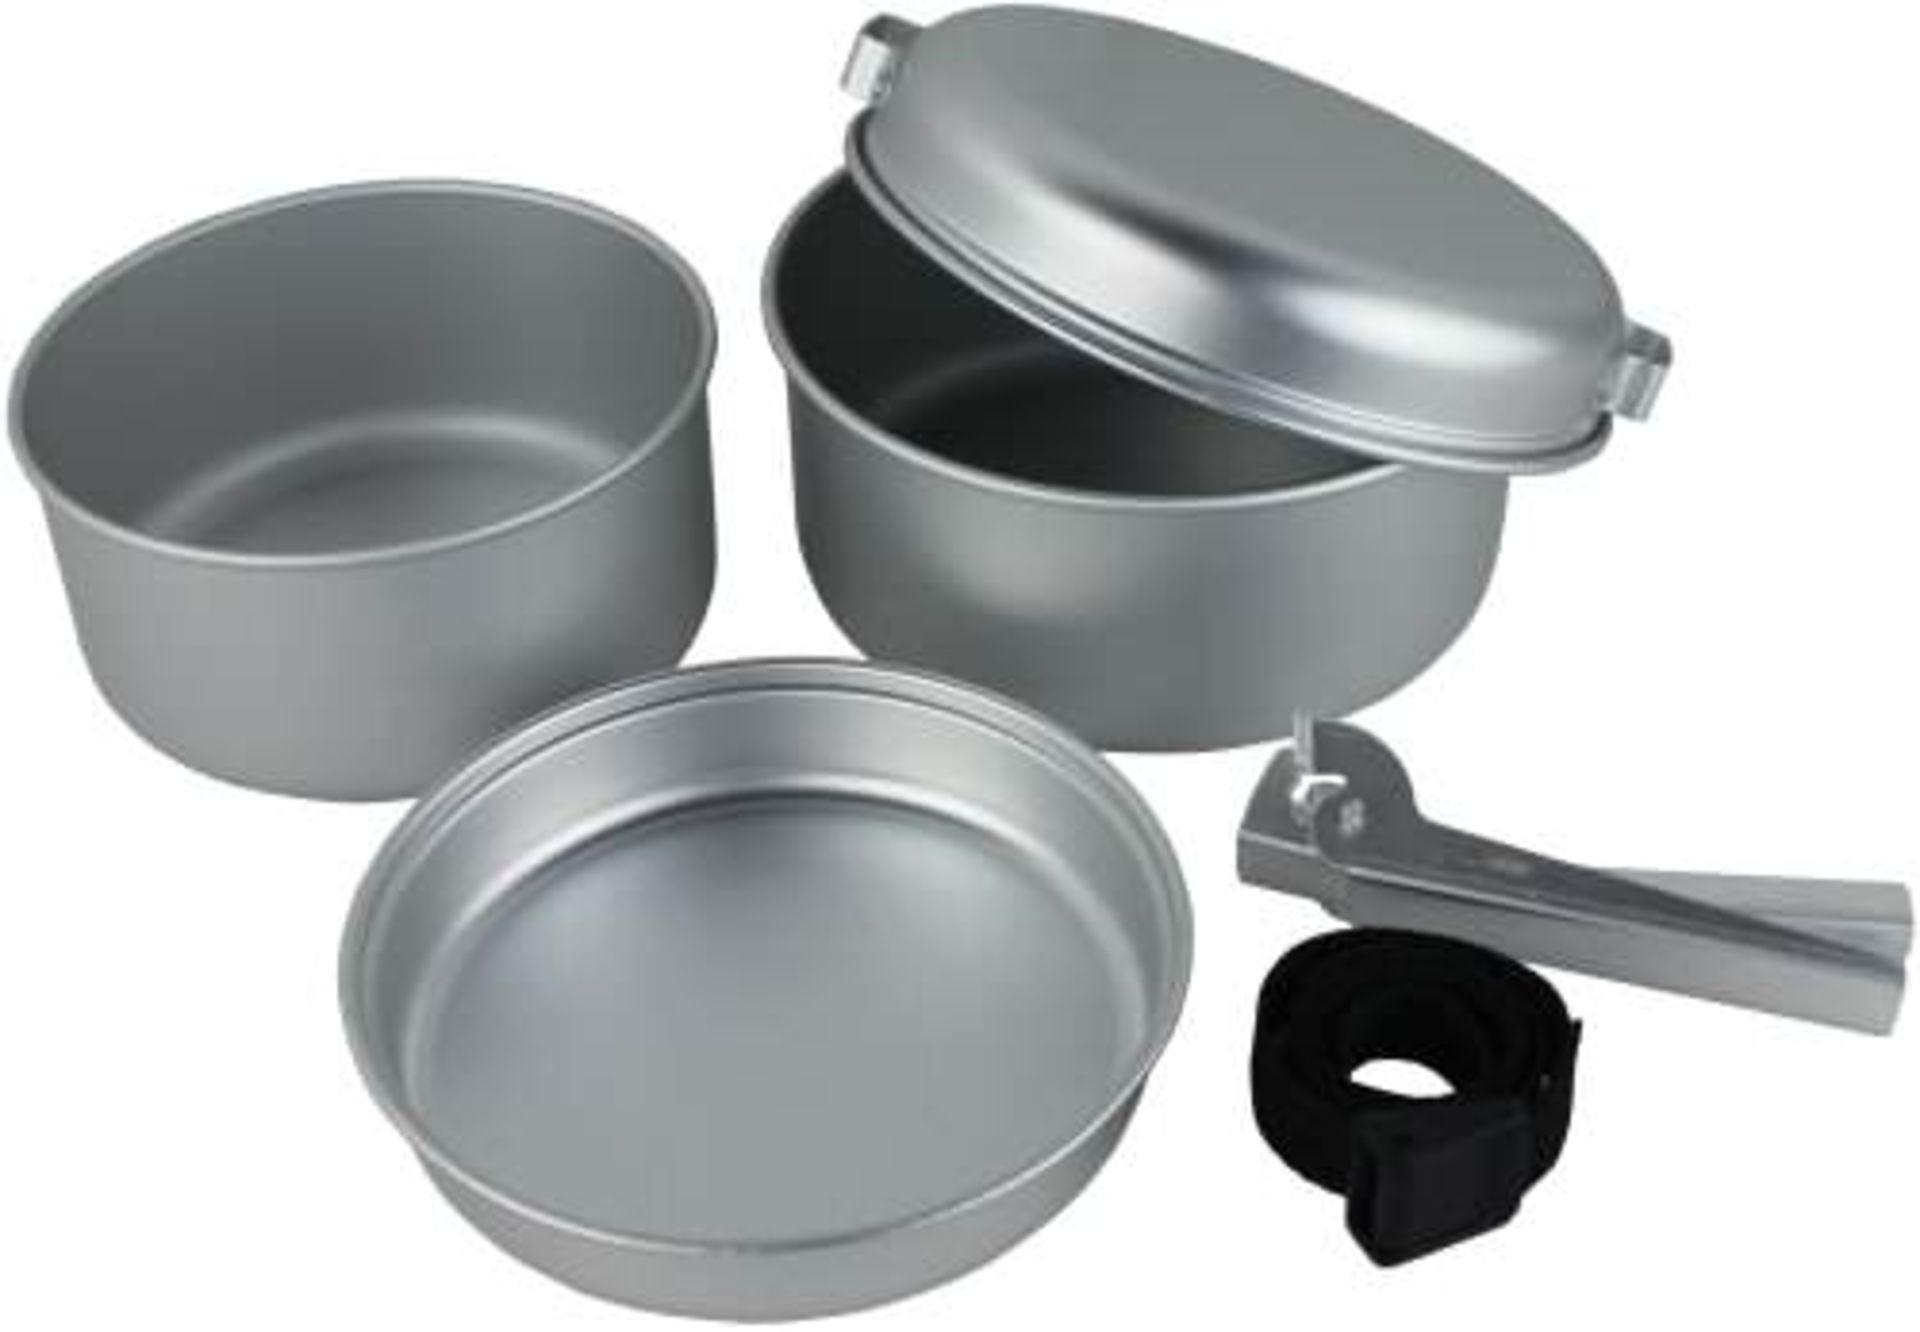 V *TRADE QTY* Brand New 5Pce Aluminium Cook Set Inc 2 Saucepans 1 Frying Pan Etc X 4 YOUR BID